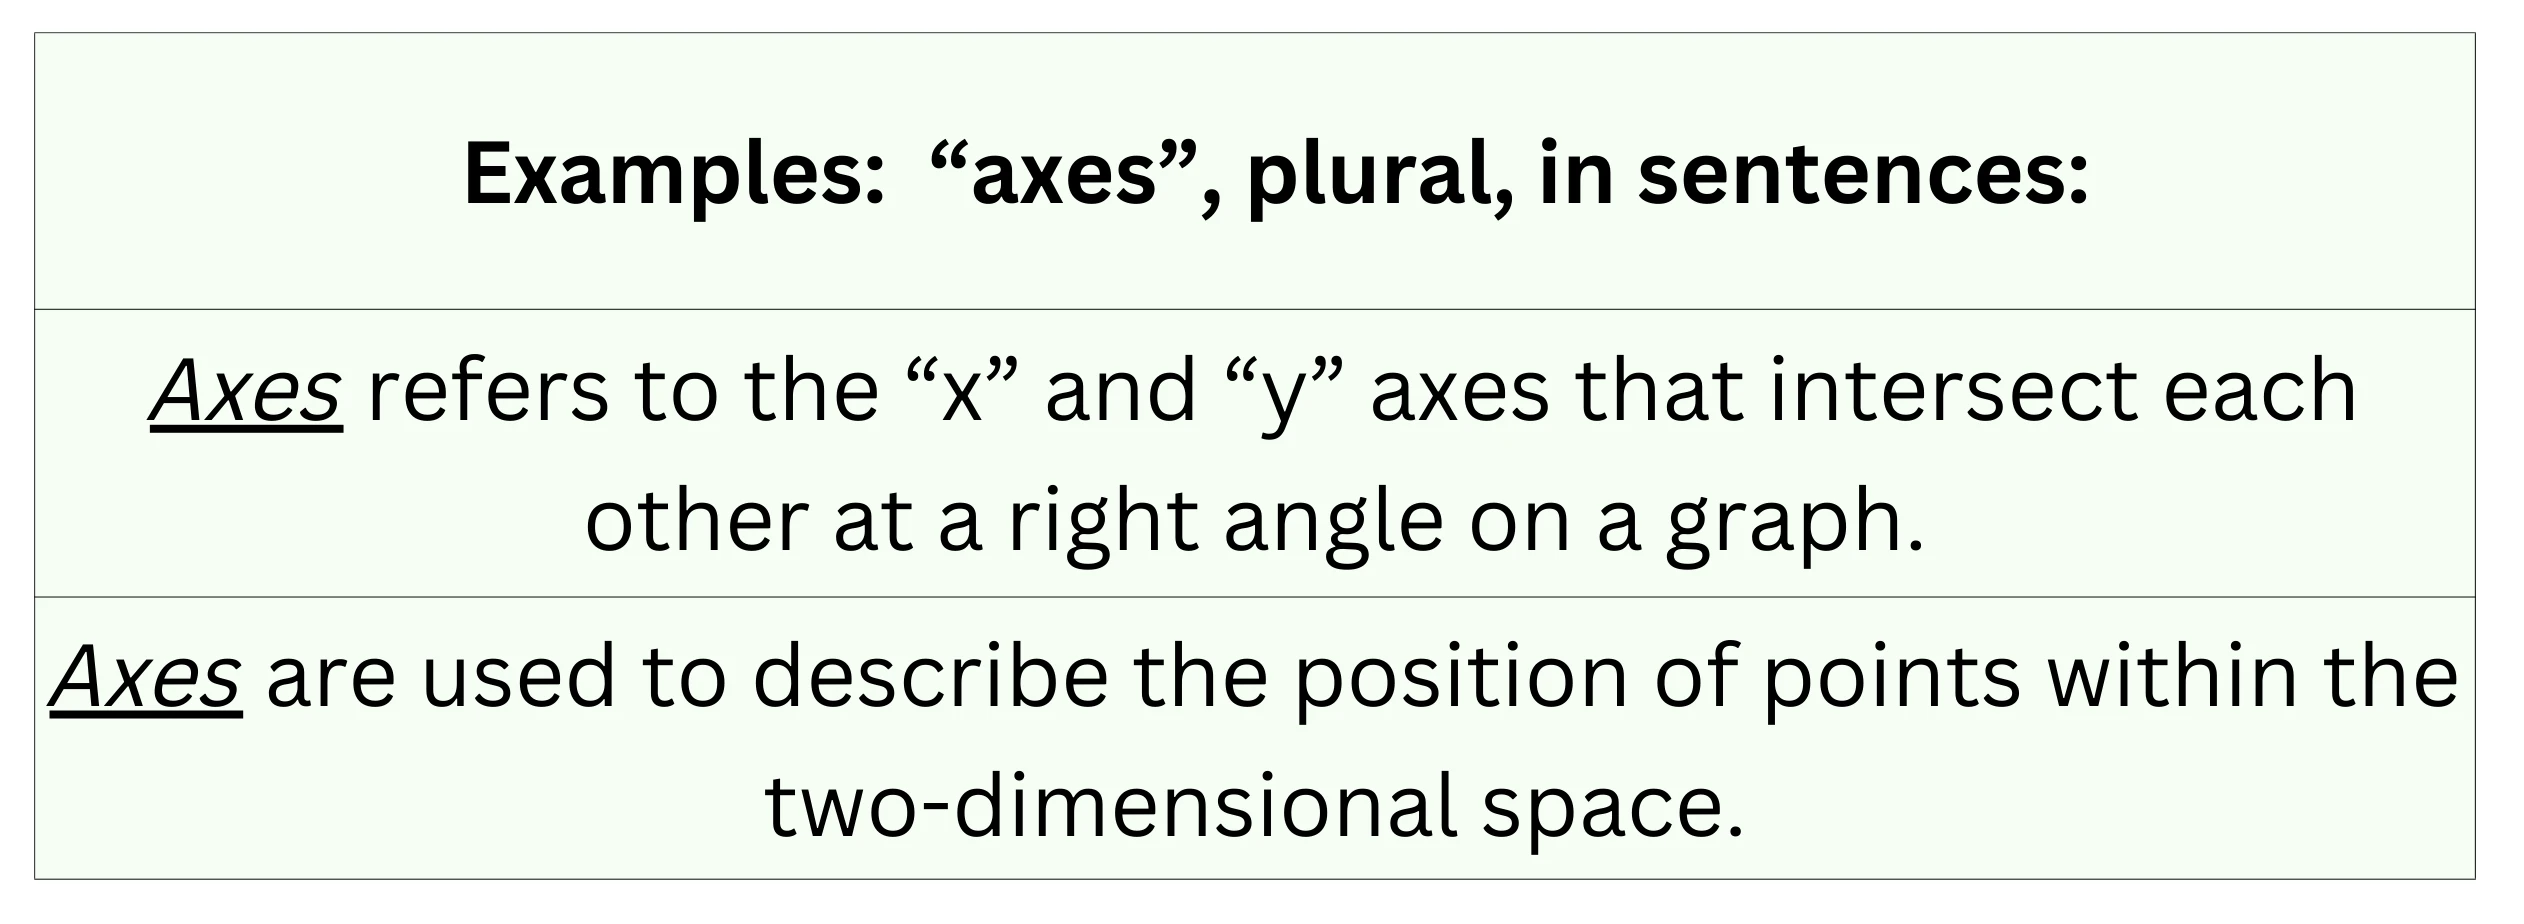 Examples of "axes" used as a plural noun in sentences.